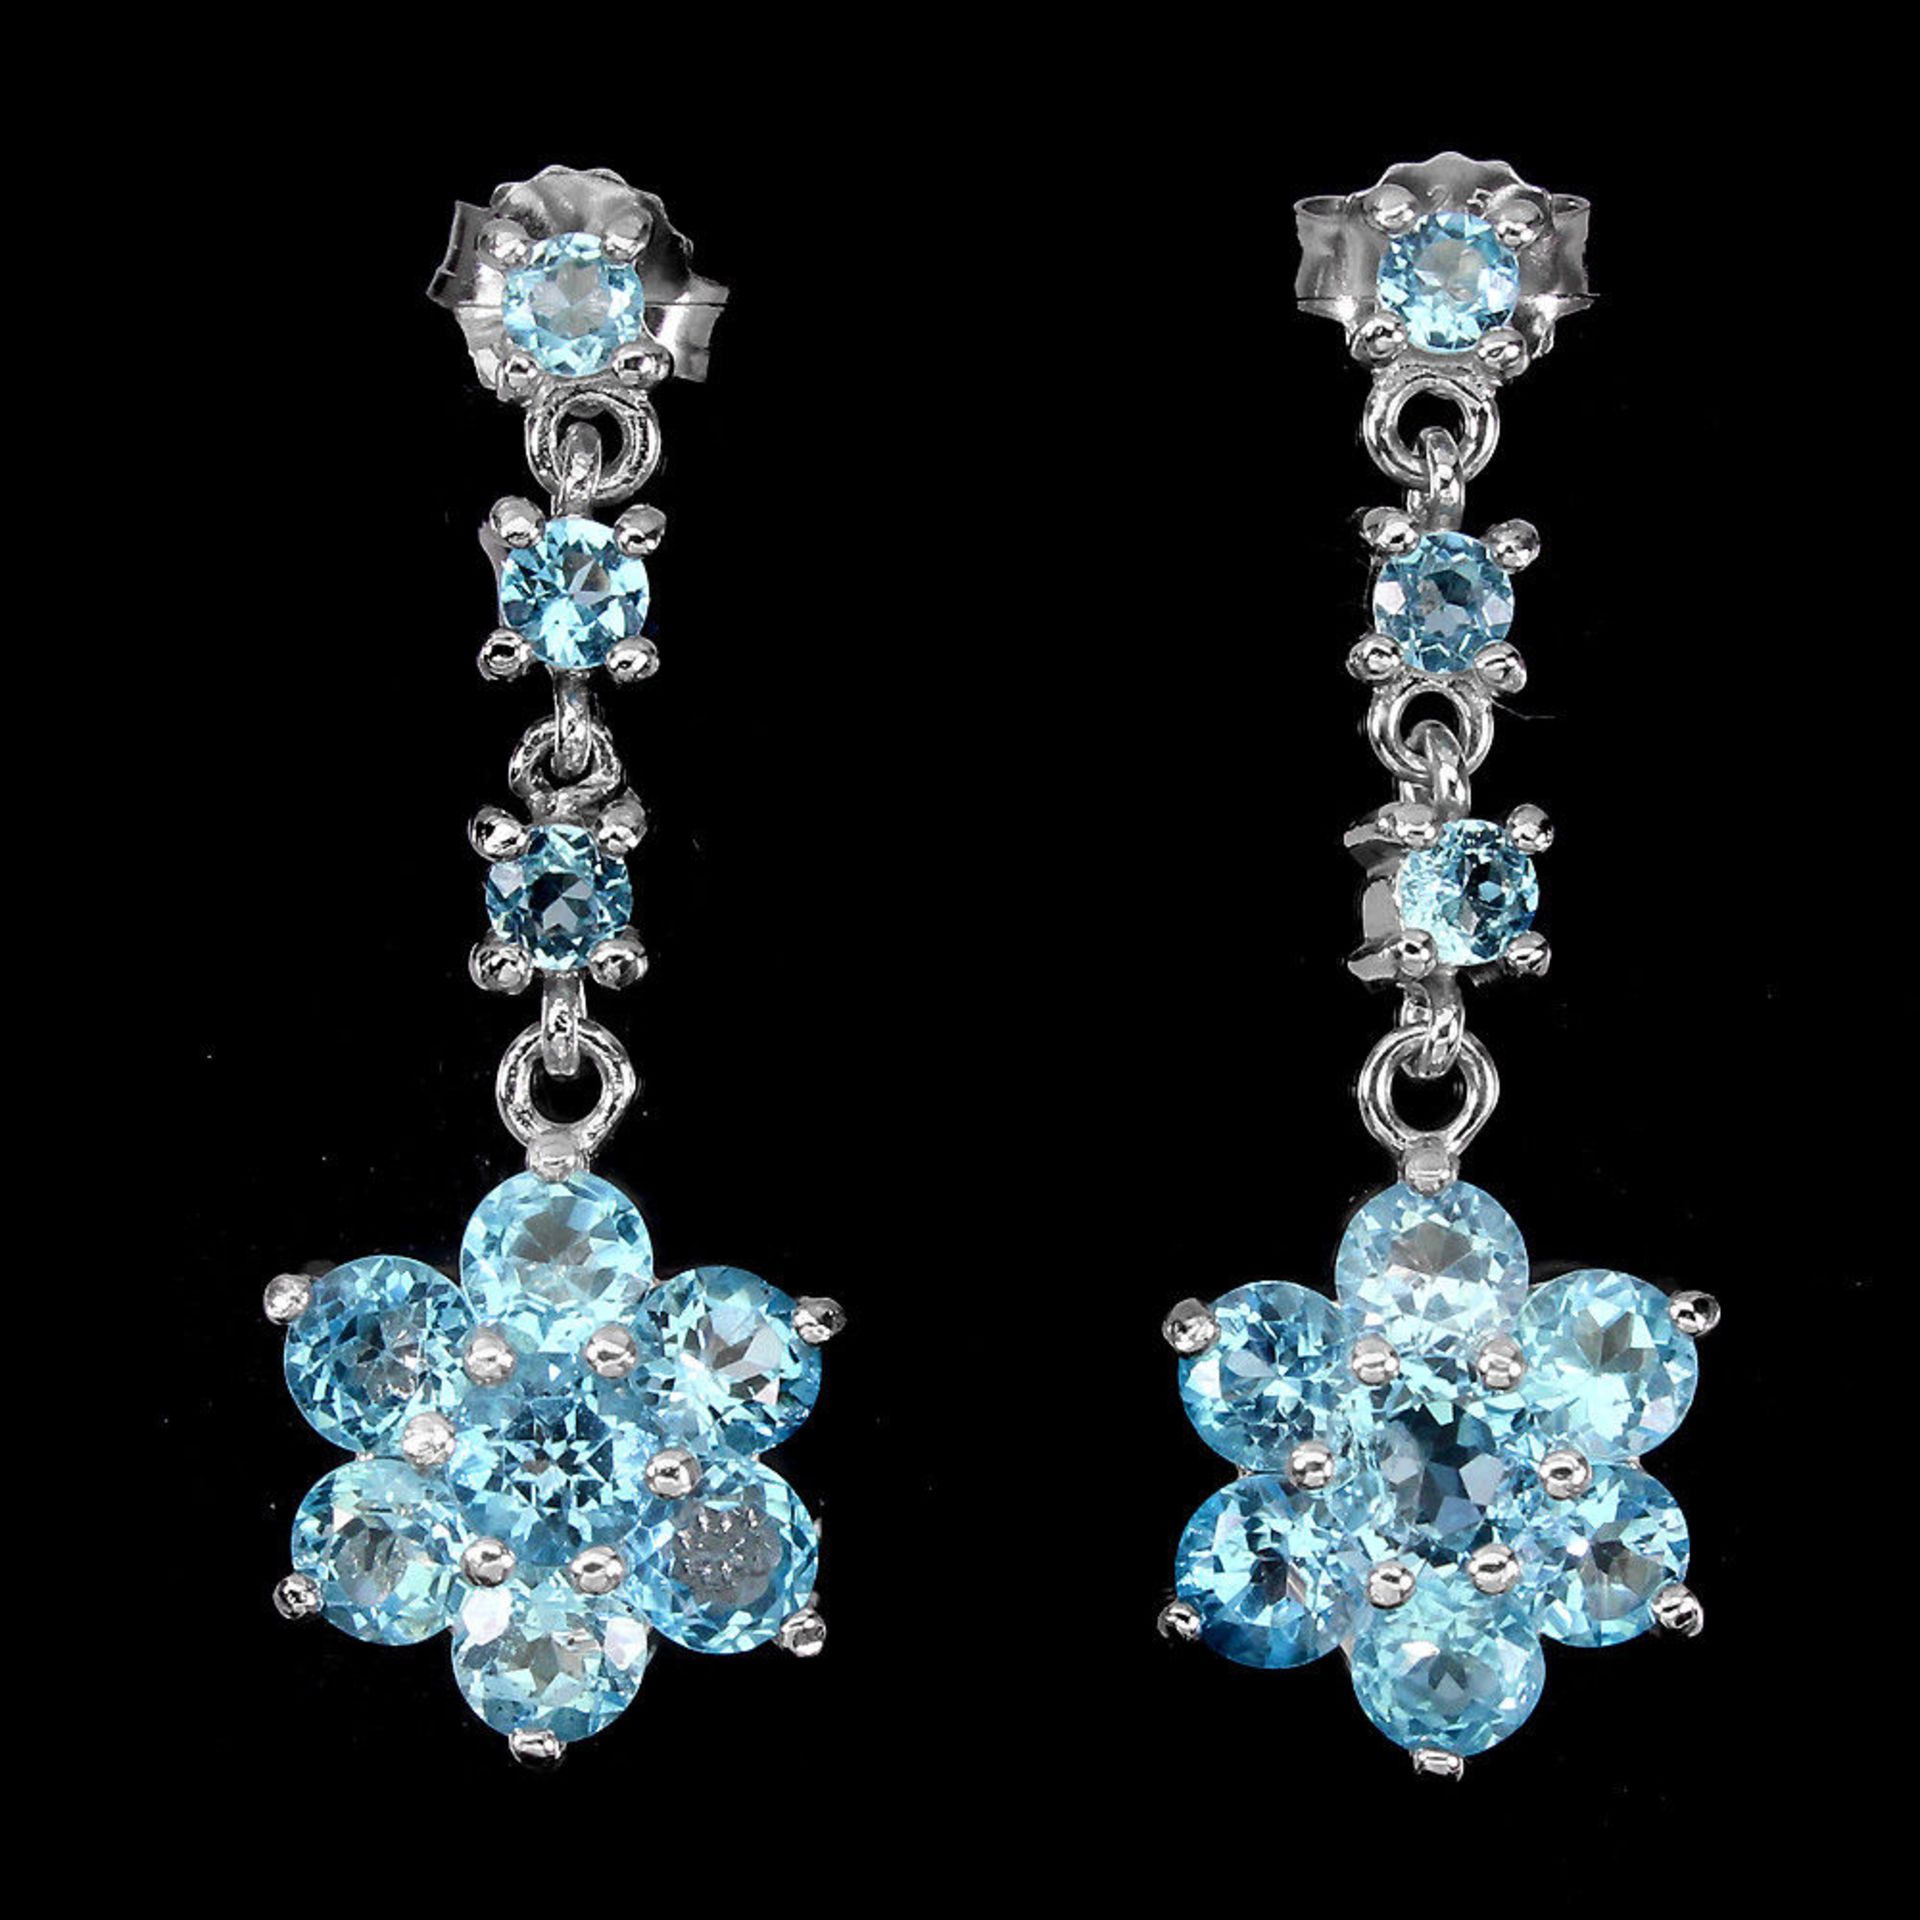 Beautiful Pair of Natural Swiss Blue Topaz Earrings, set with 10 Natural Blue Topaz in each Earring.